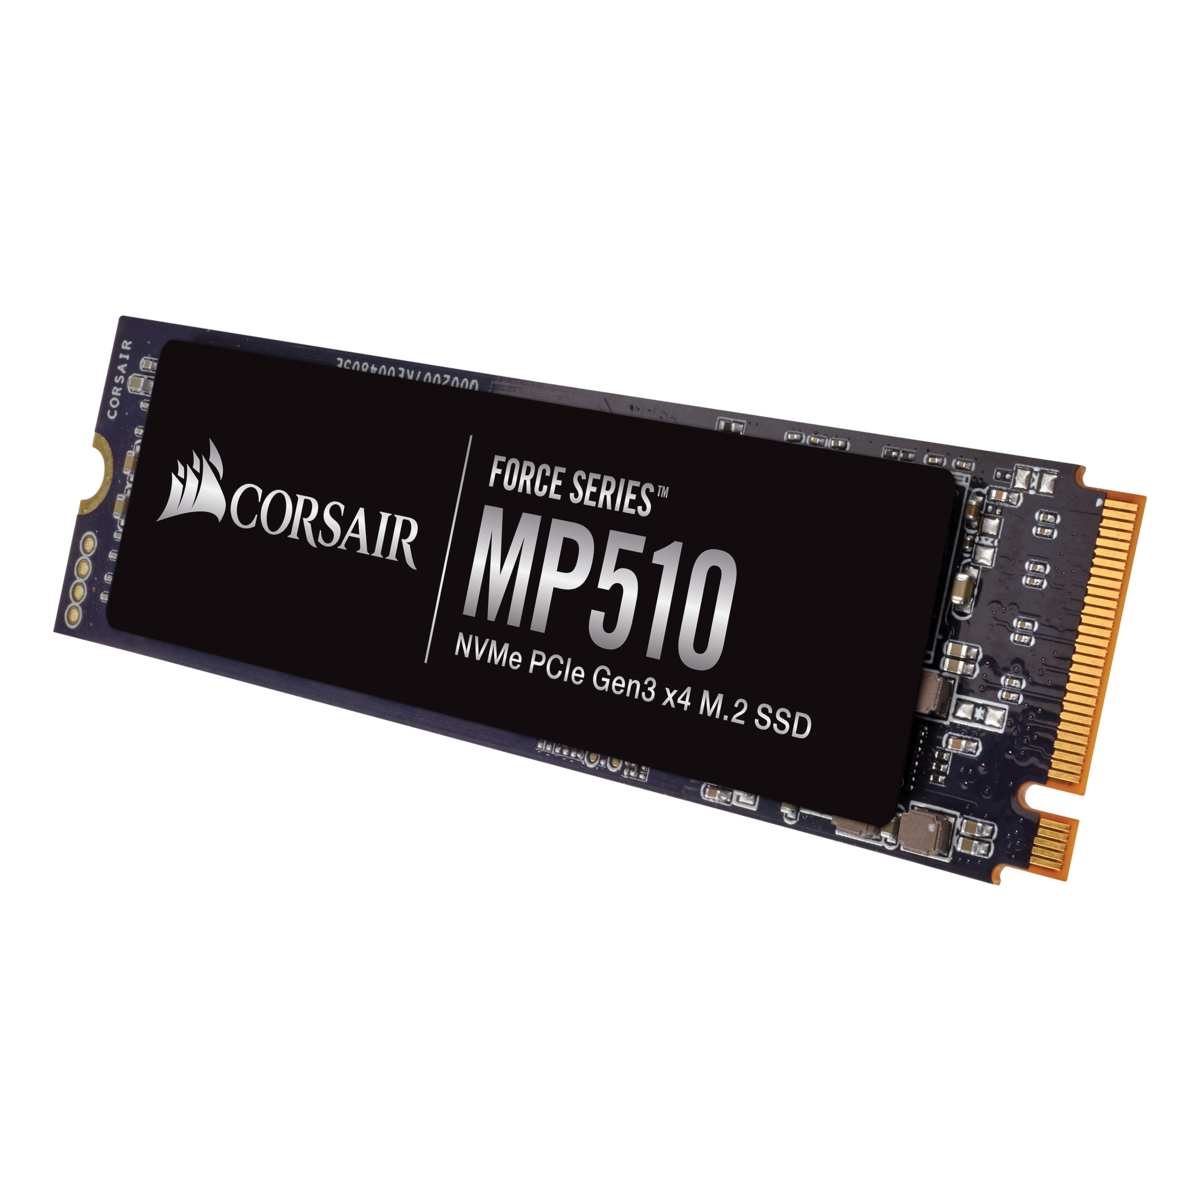 CORSAIR Force MP510 NVMe PCIe Gen3 x4 M.2 480GB SSD